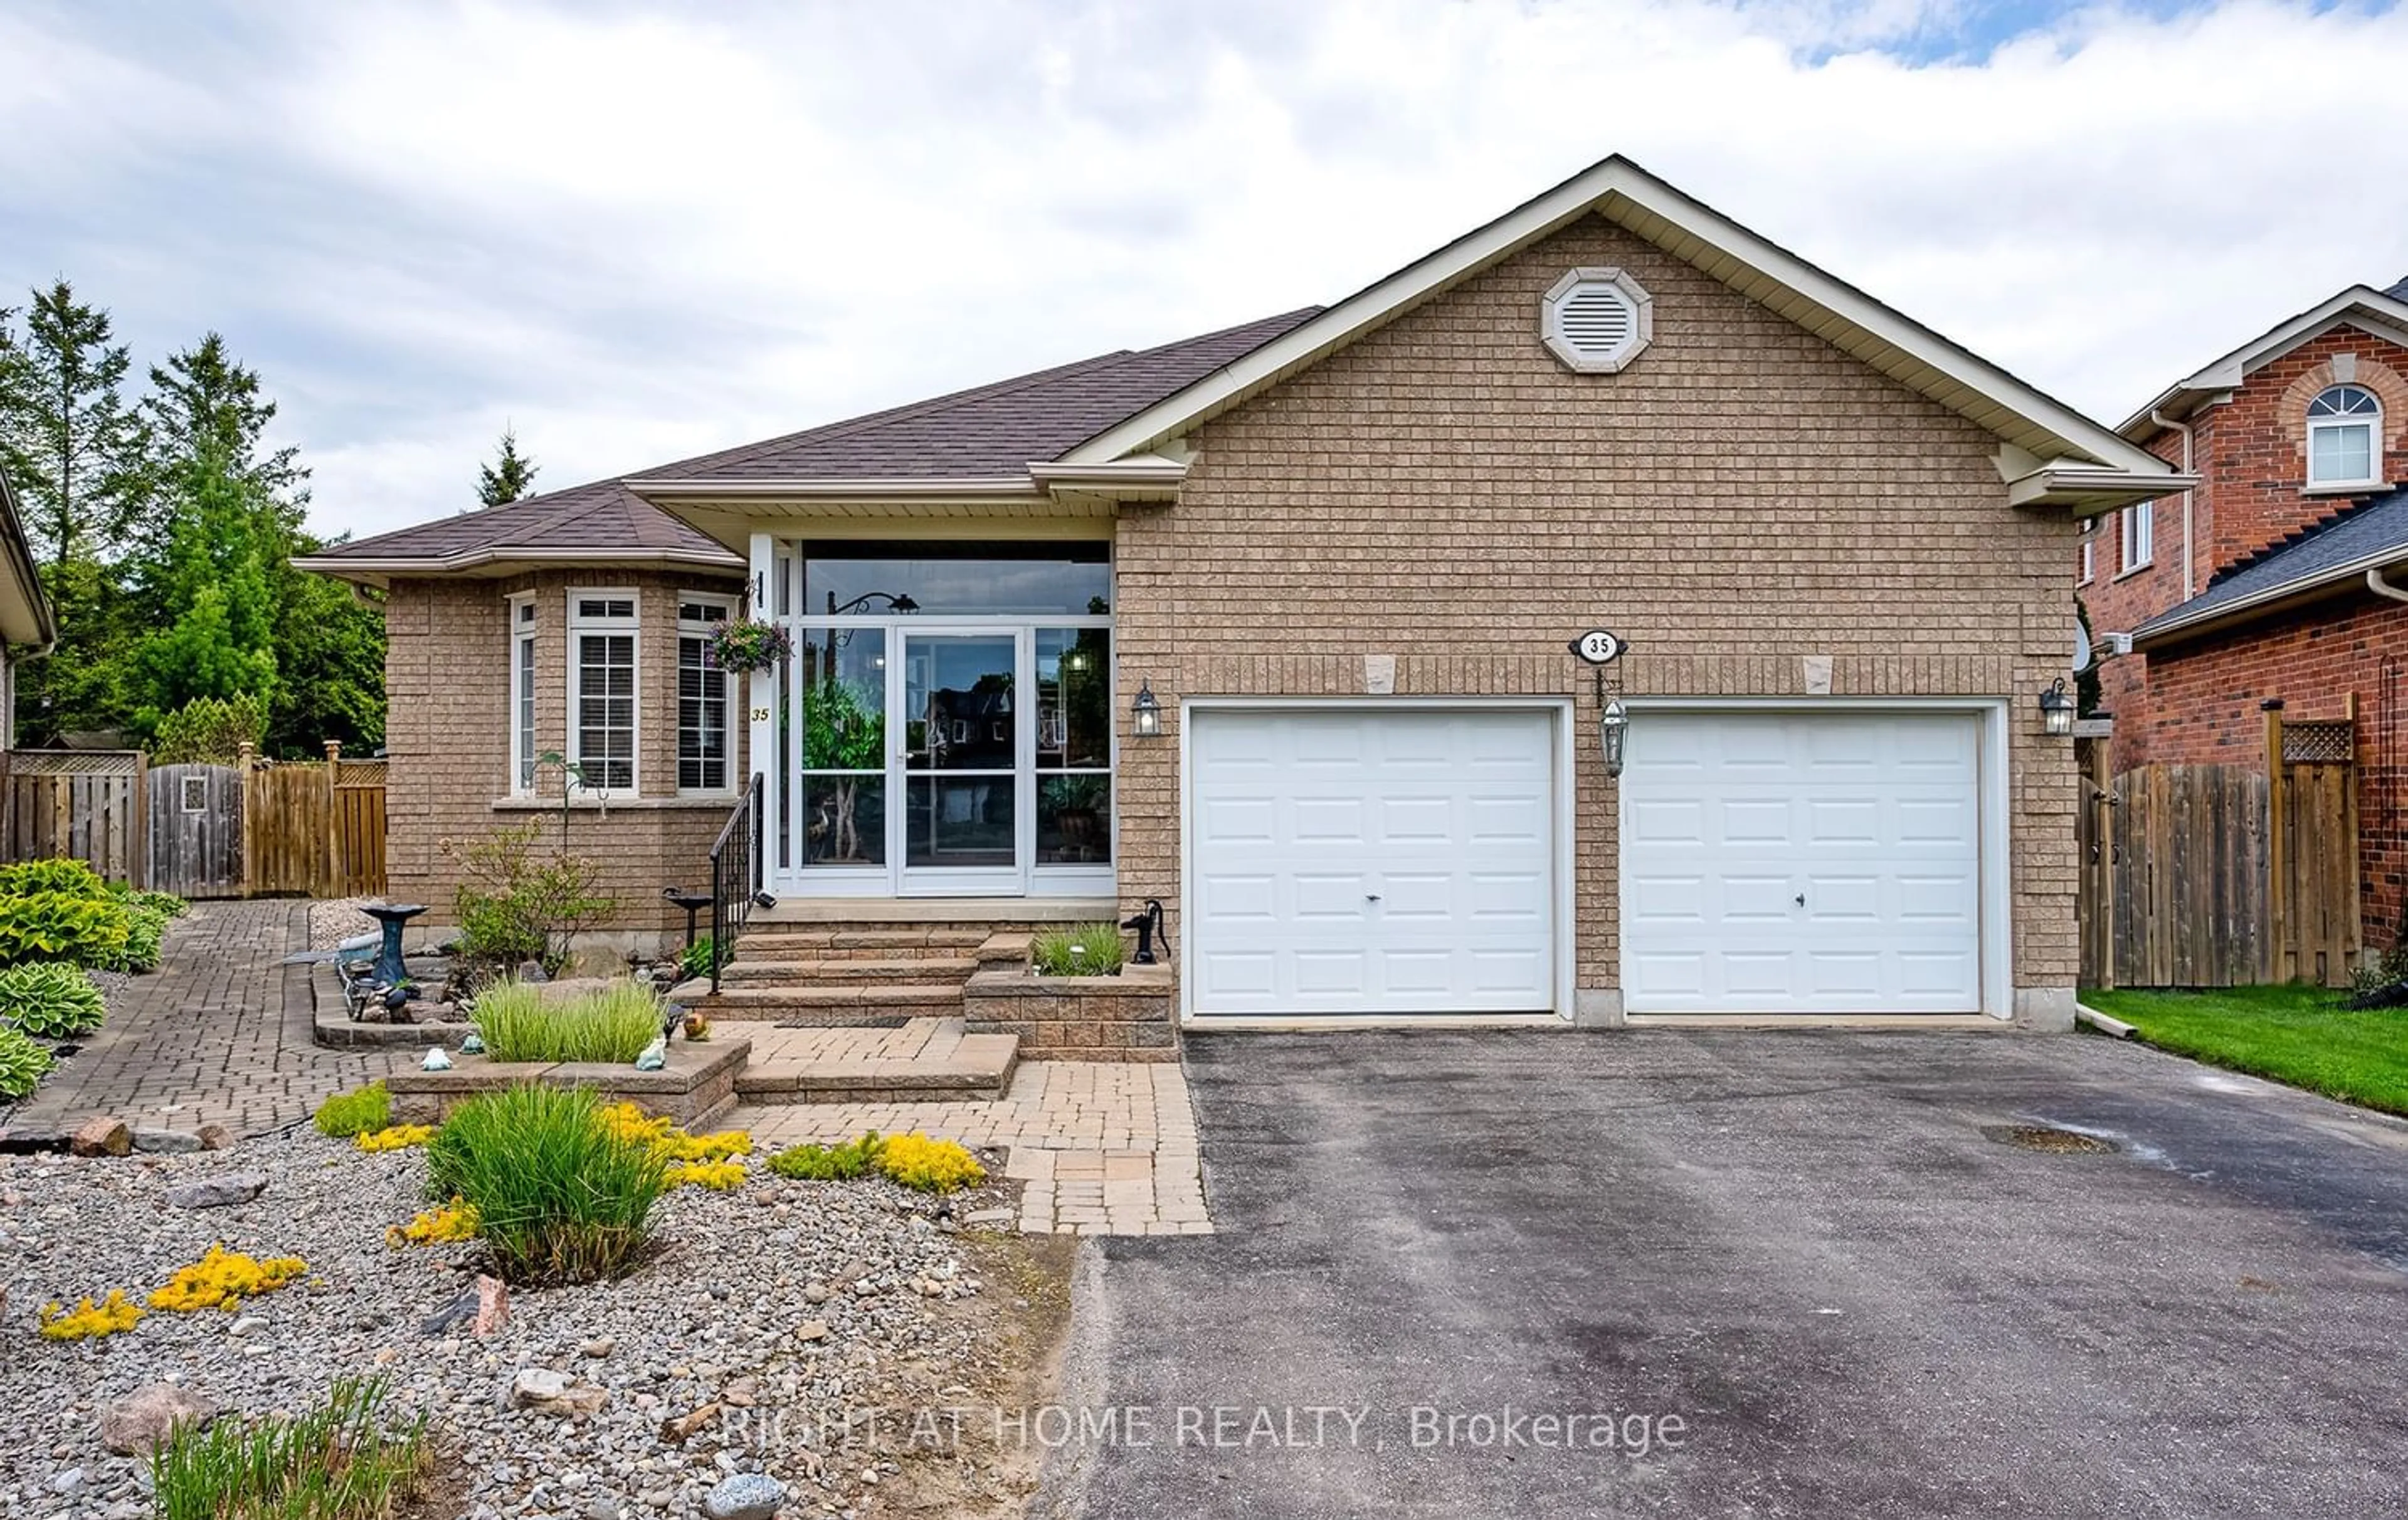 Home with brick exterior material for 35 Sadler Cres, Scugog Ontario L9L 1T4